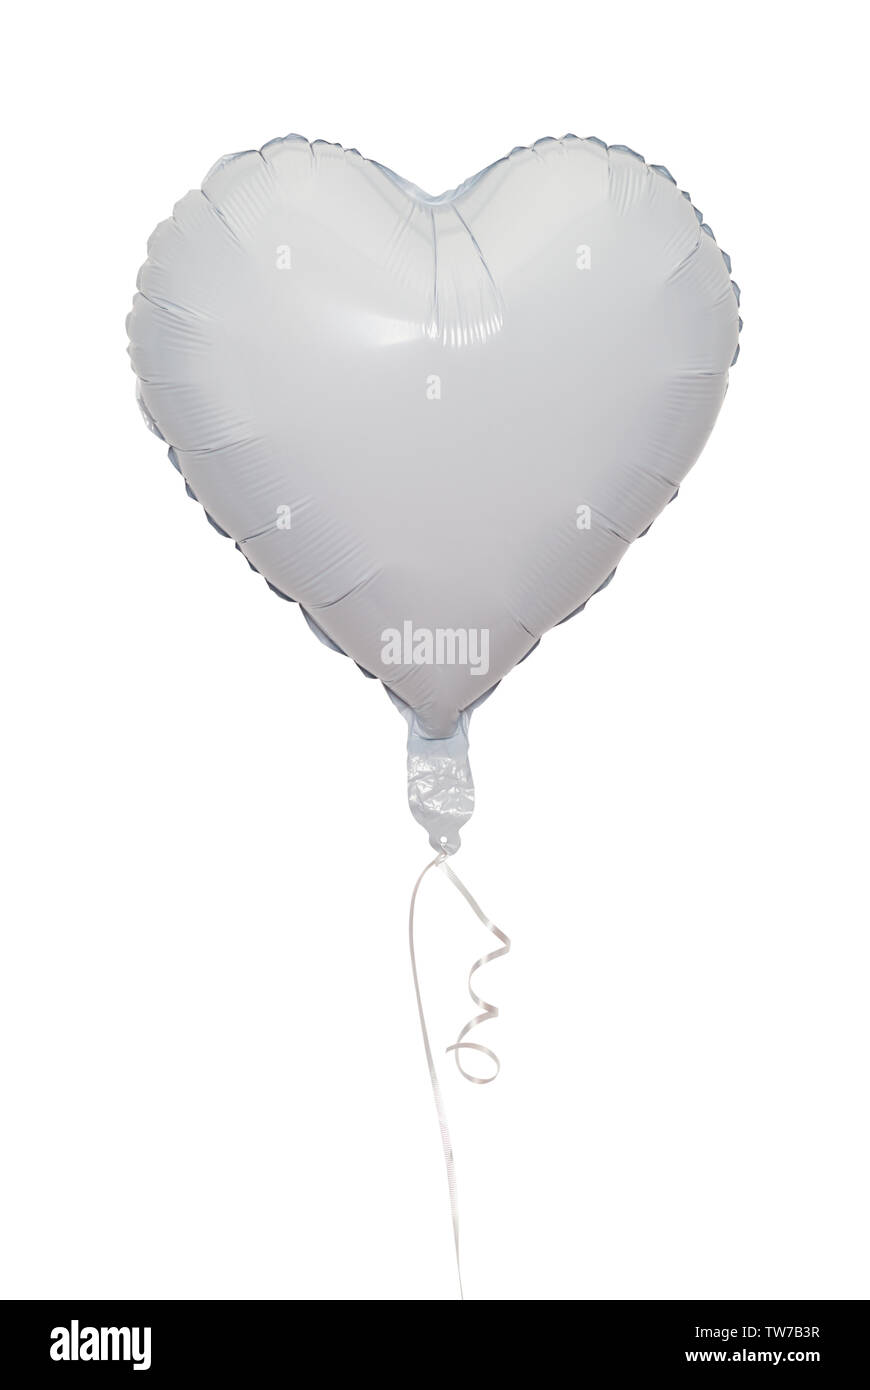 White Helium Heart Balloon Isolated on White Background. Stock Photo